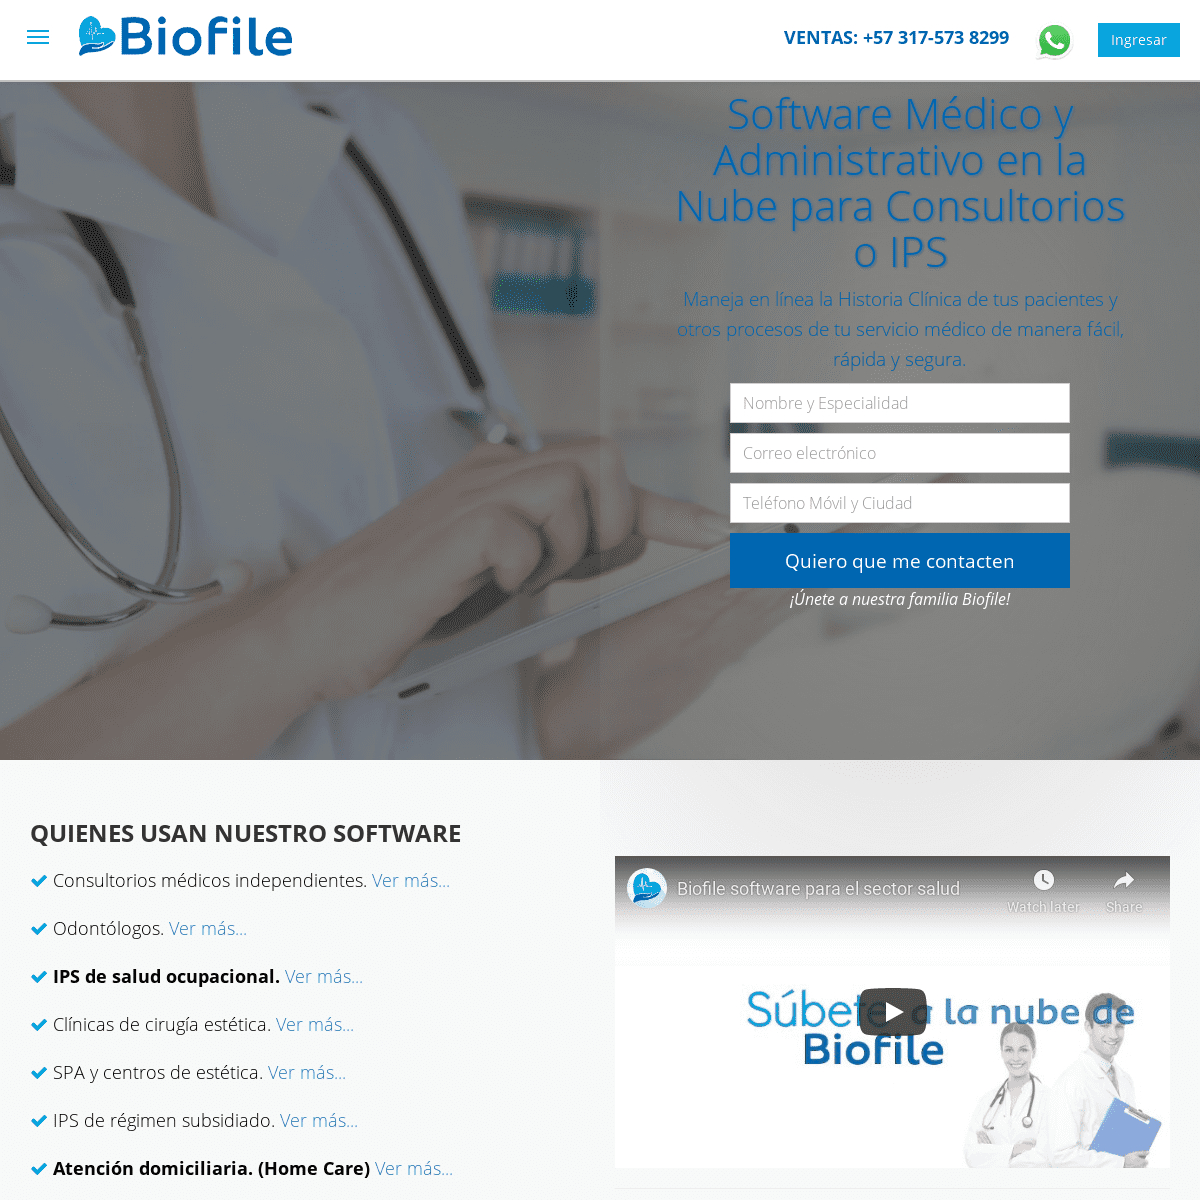 A complete backup of biofile.com.co